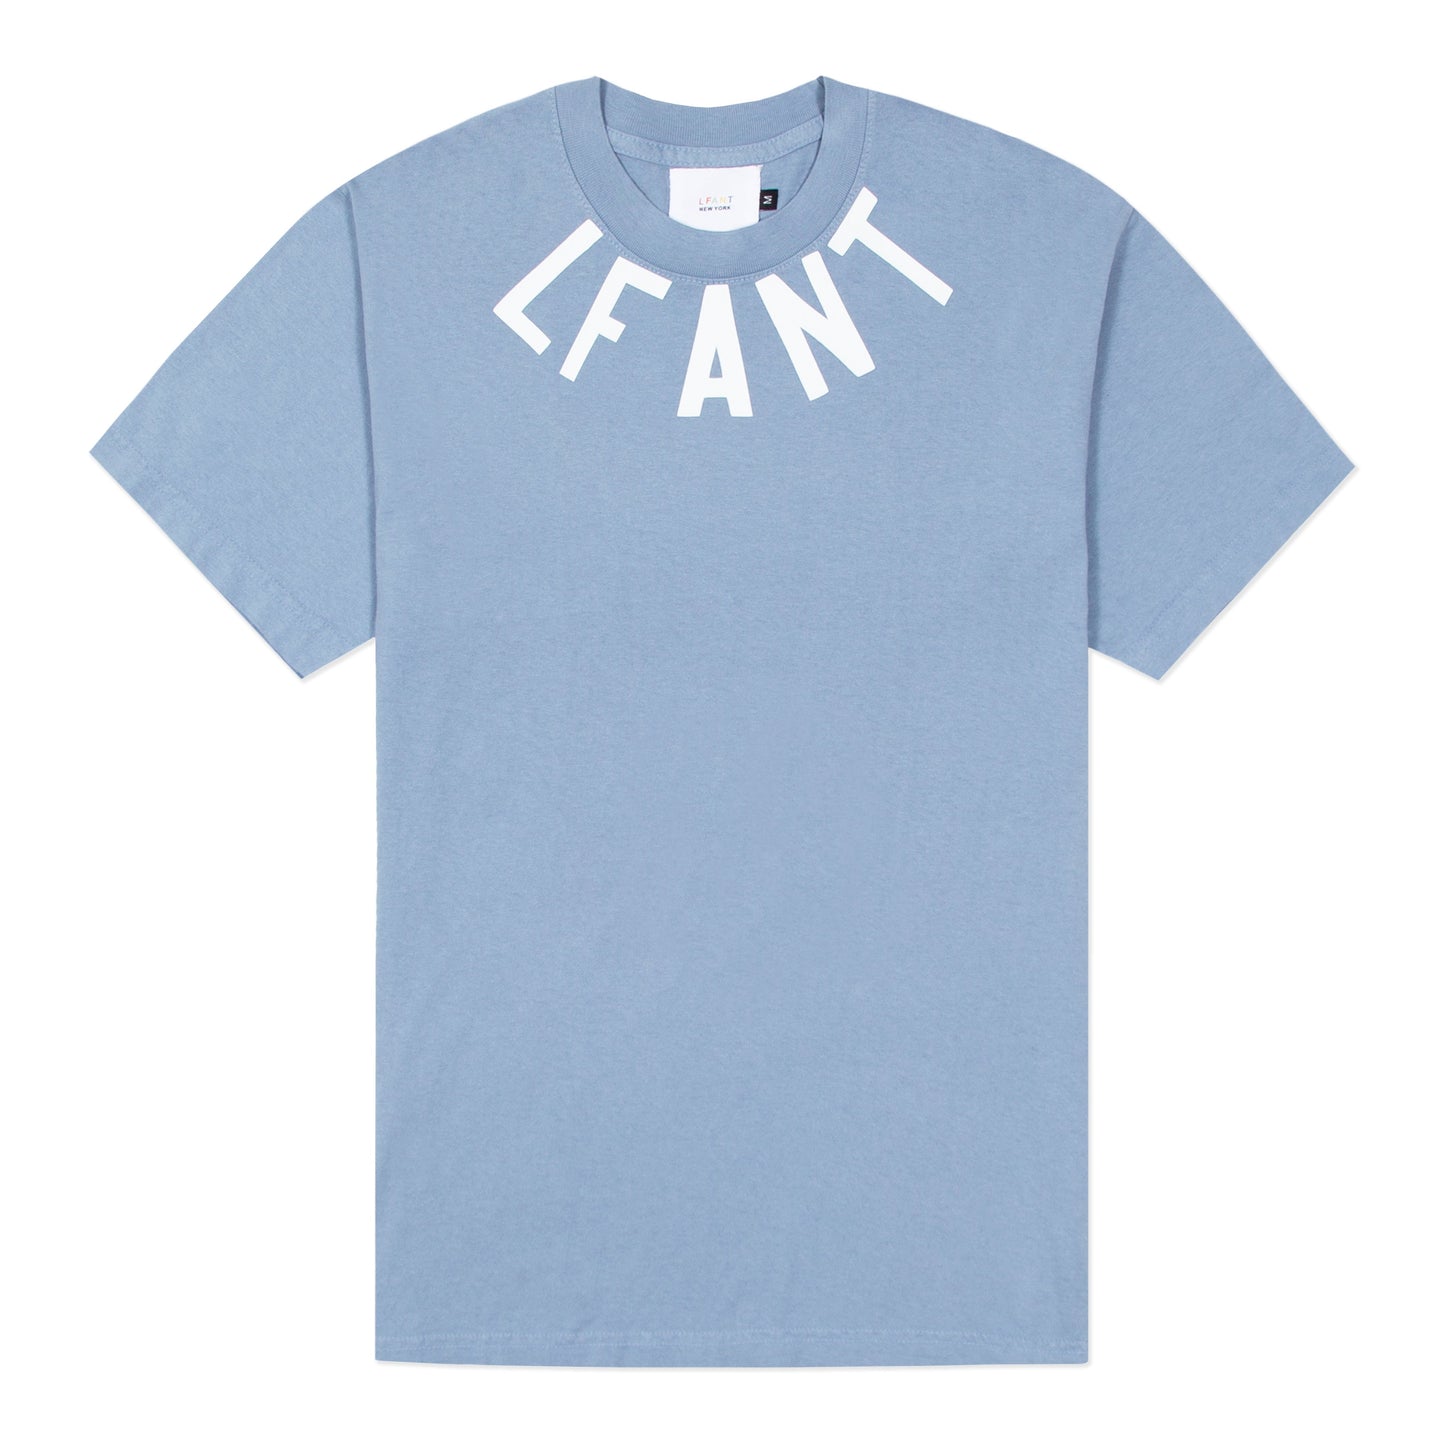 Light Blue t-shirt with "LFANT" printed around the collar.